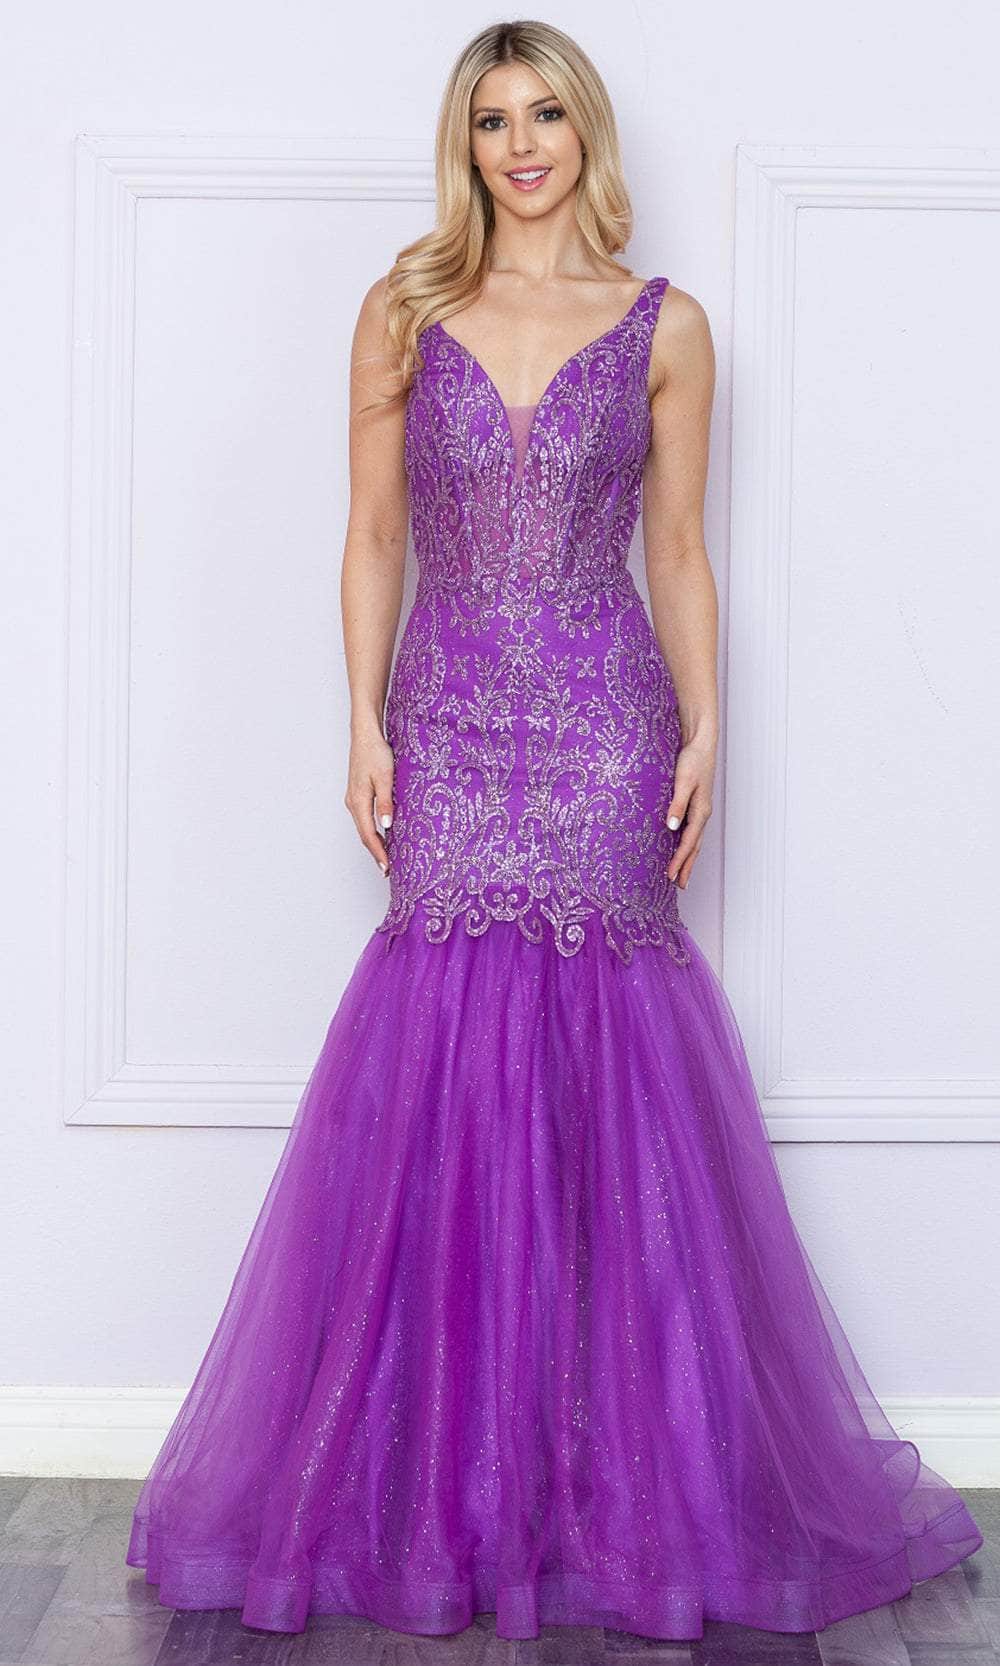 Image of Poly USA 9388 - Sleeveless Glitter Mermaid Prom Dress